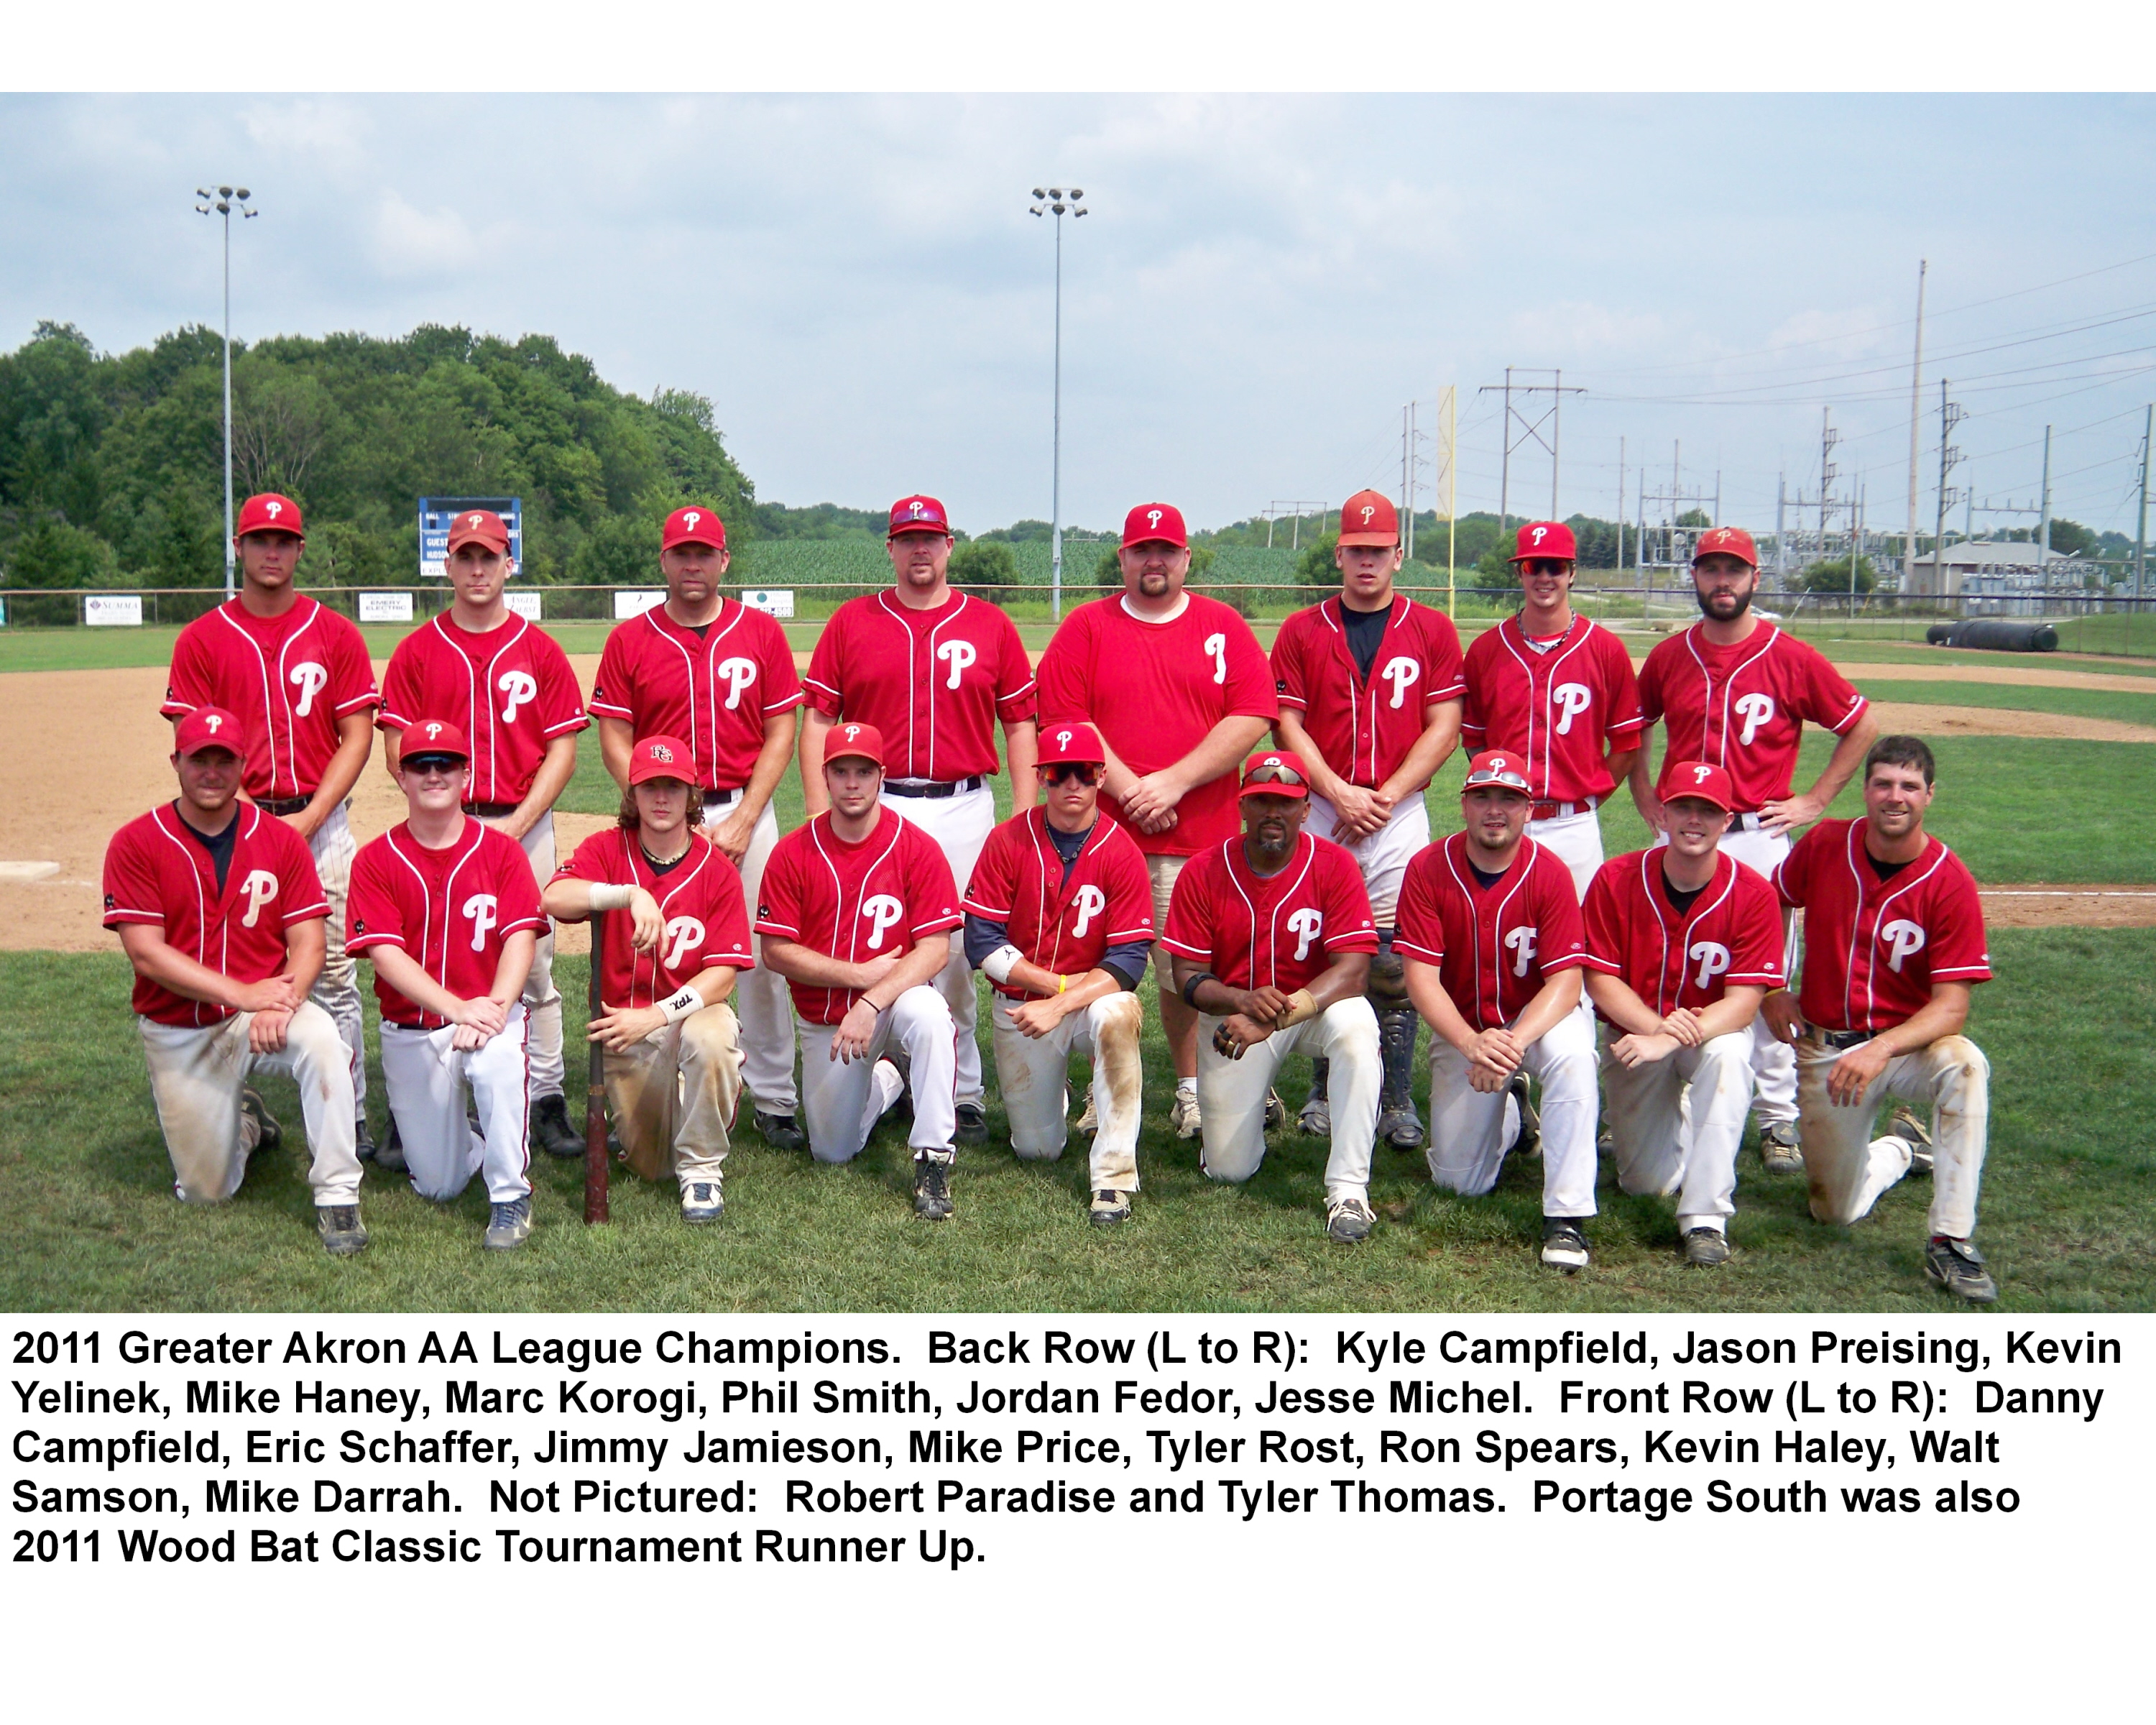 Portage South Baseball Team 2011